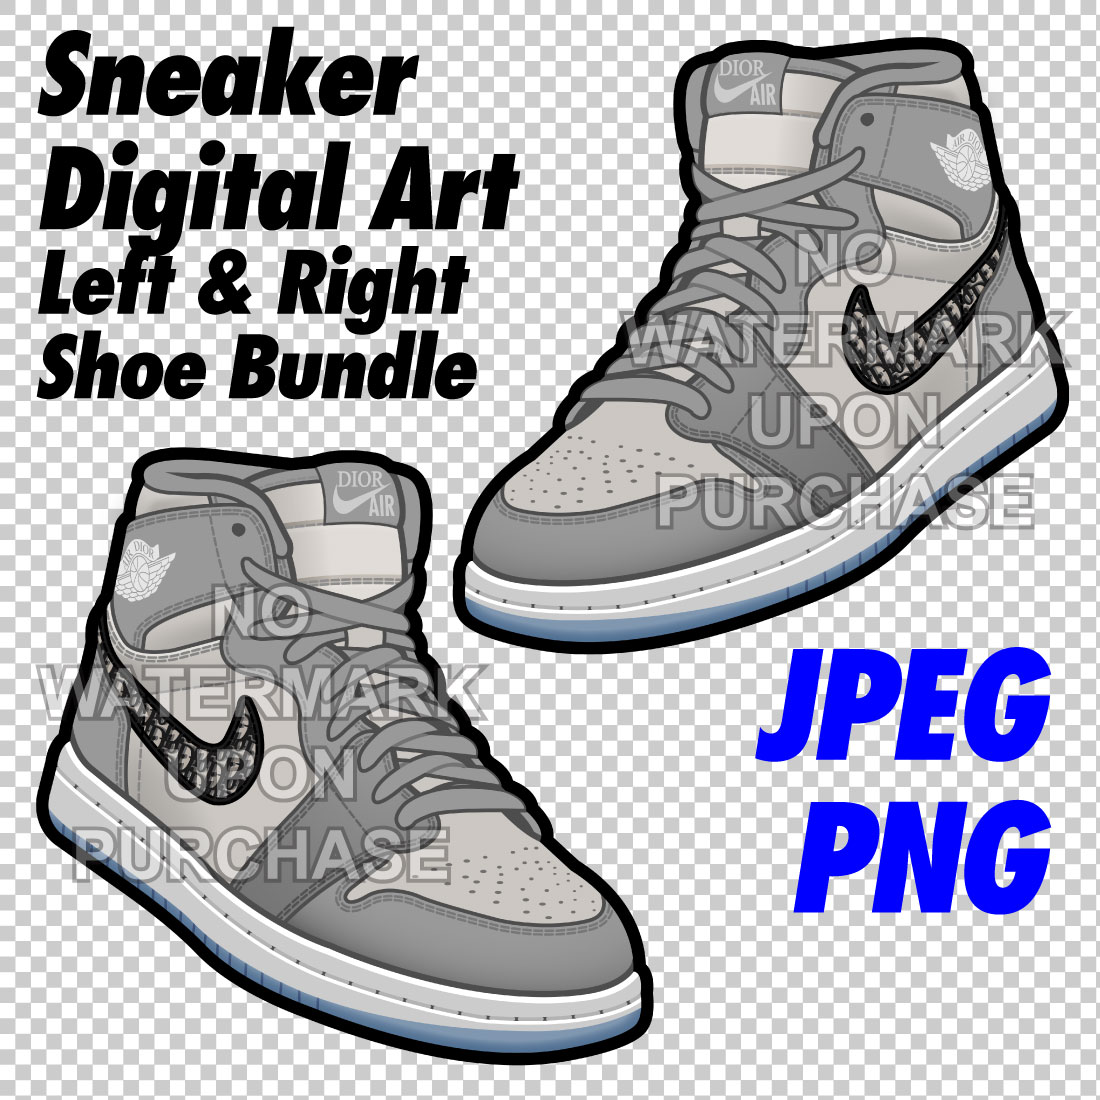 Air Jordan 1 Dior JPEG PNG left and right shoe bundle cover image.